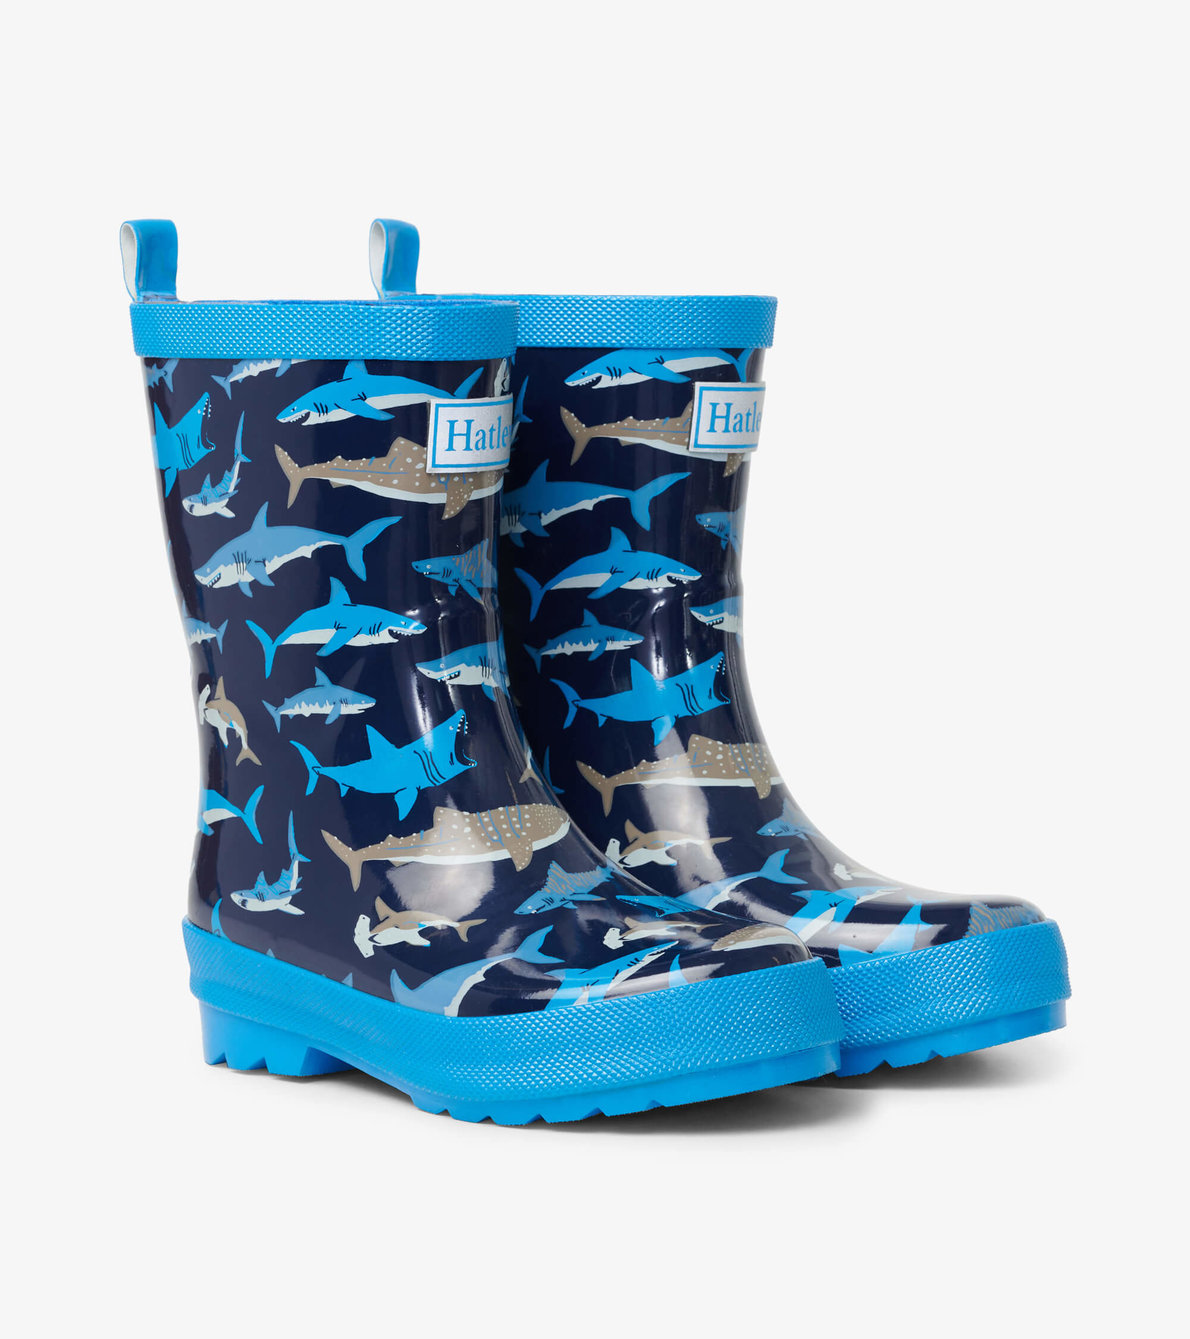 View larger image of Shark School Shiny Rain Boots